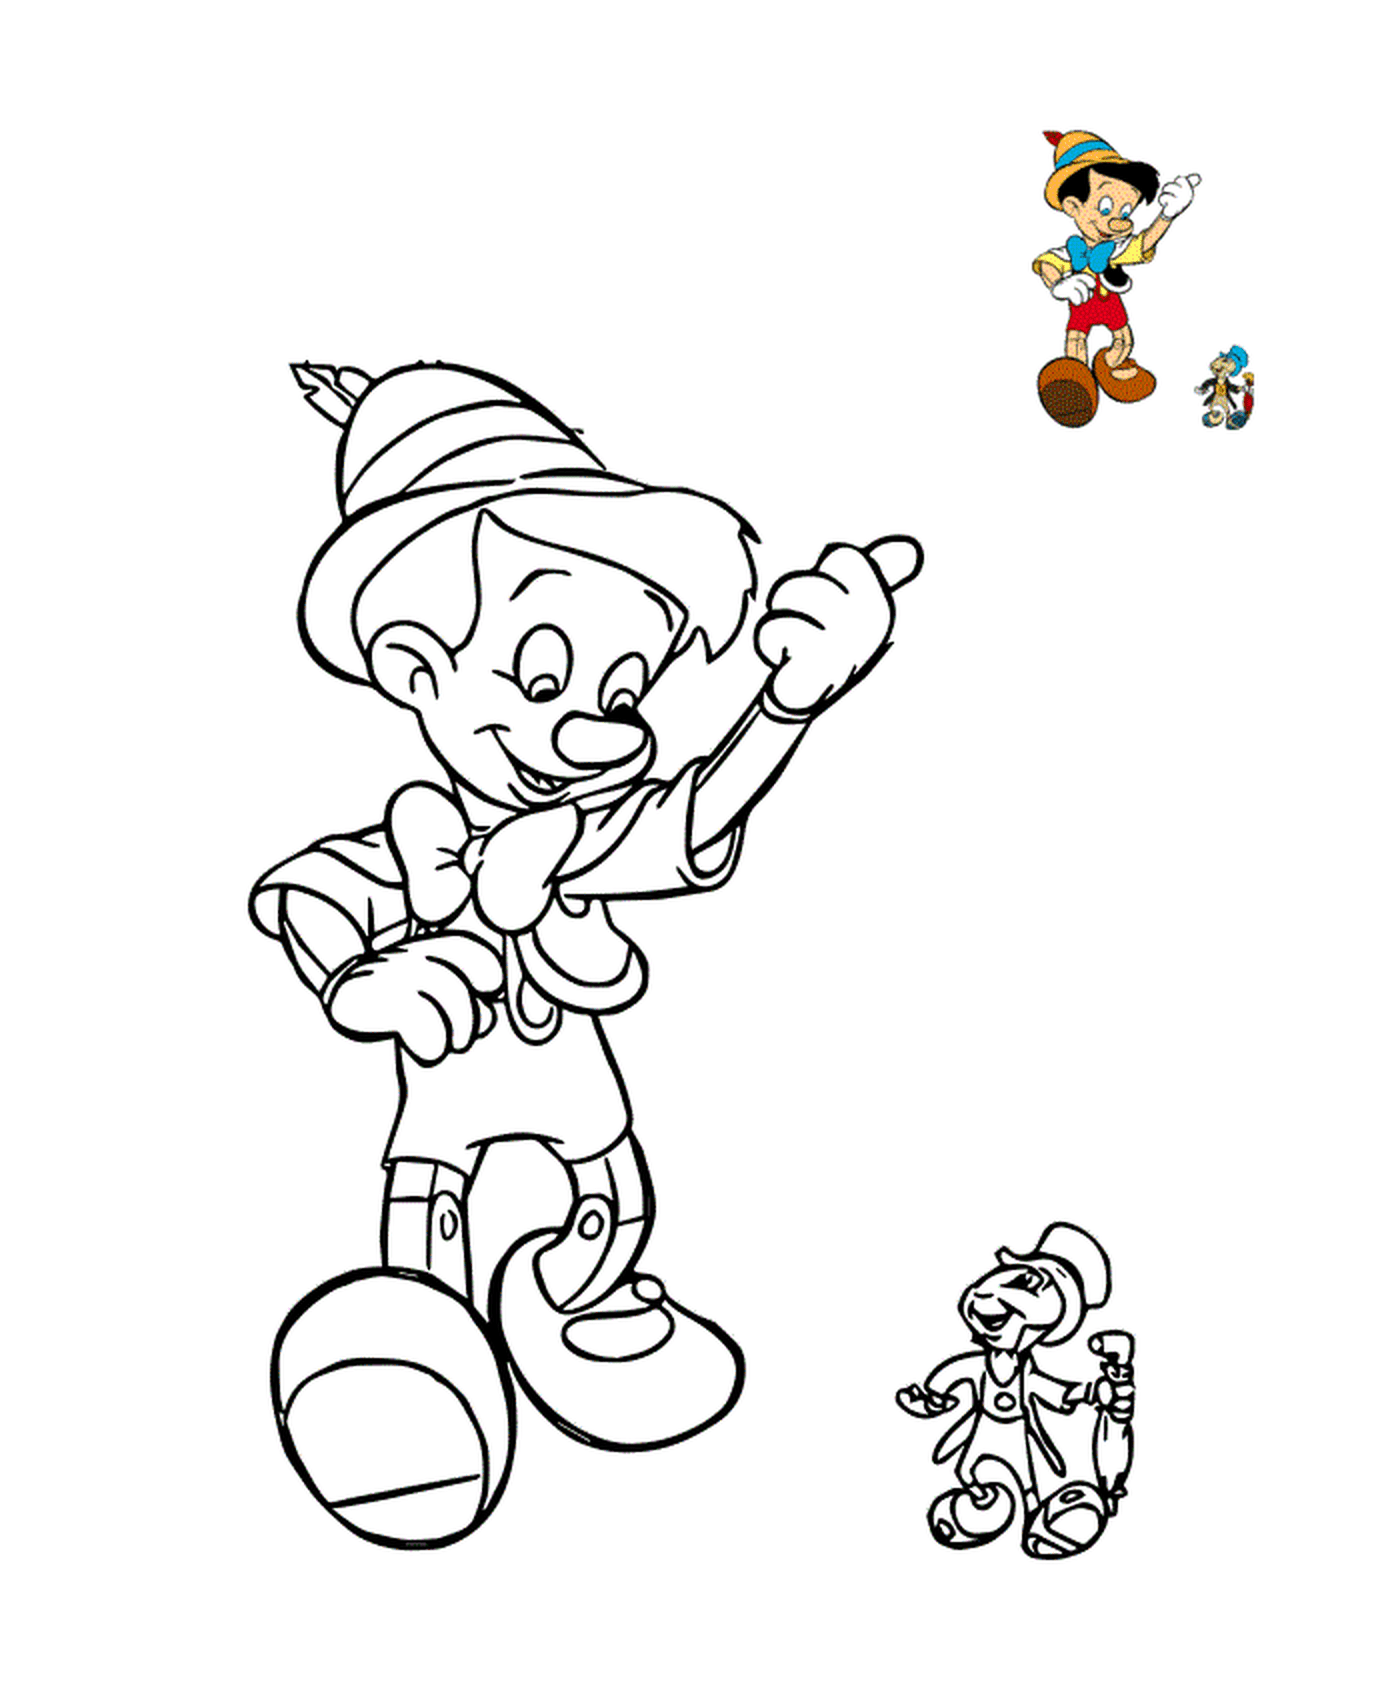  Pinocchio e Jiminy Cricket, compagni 